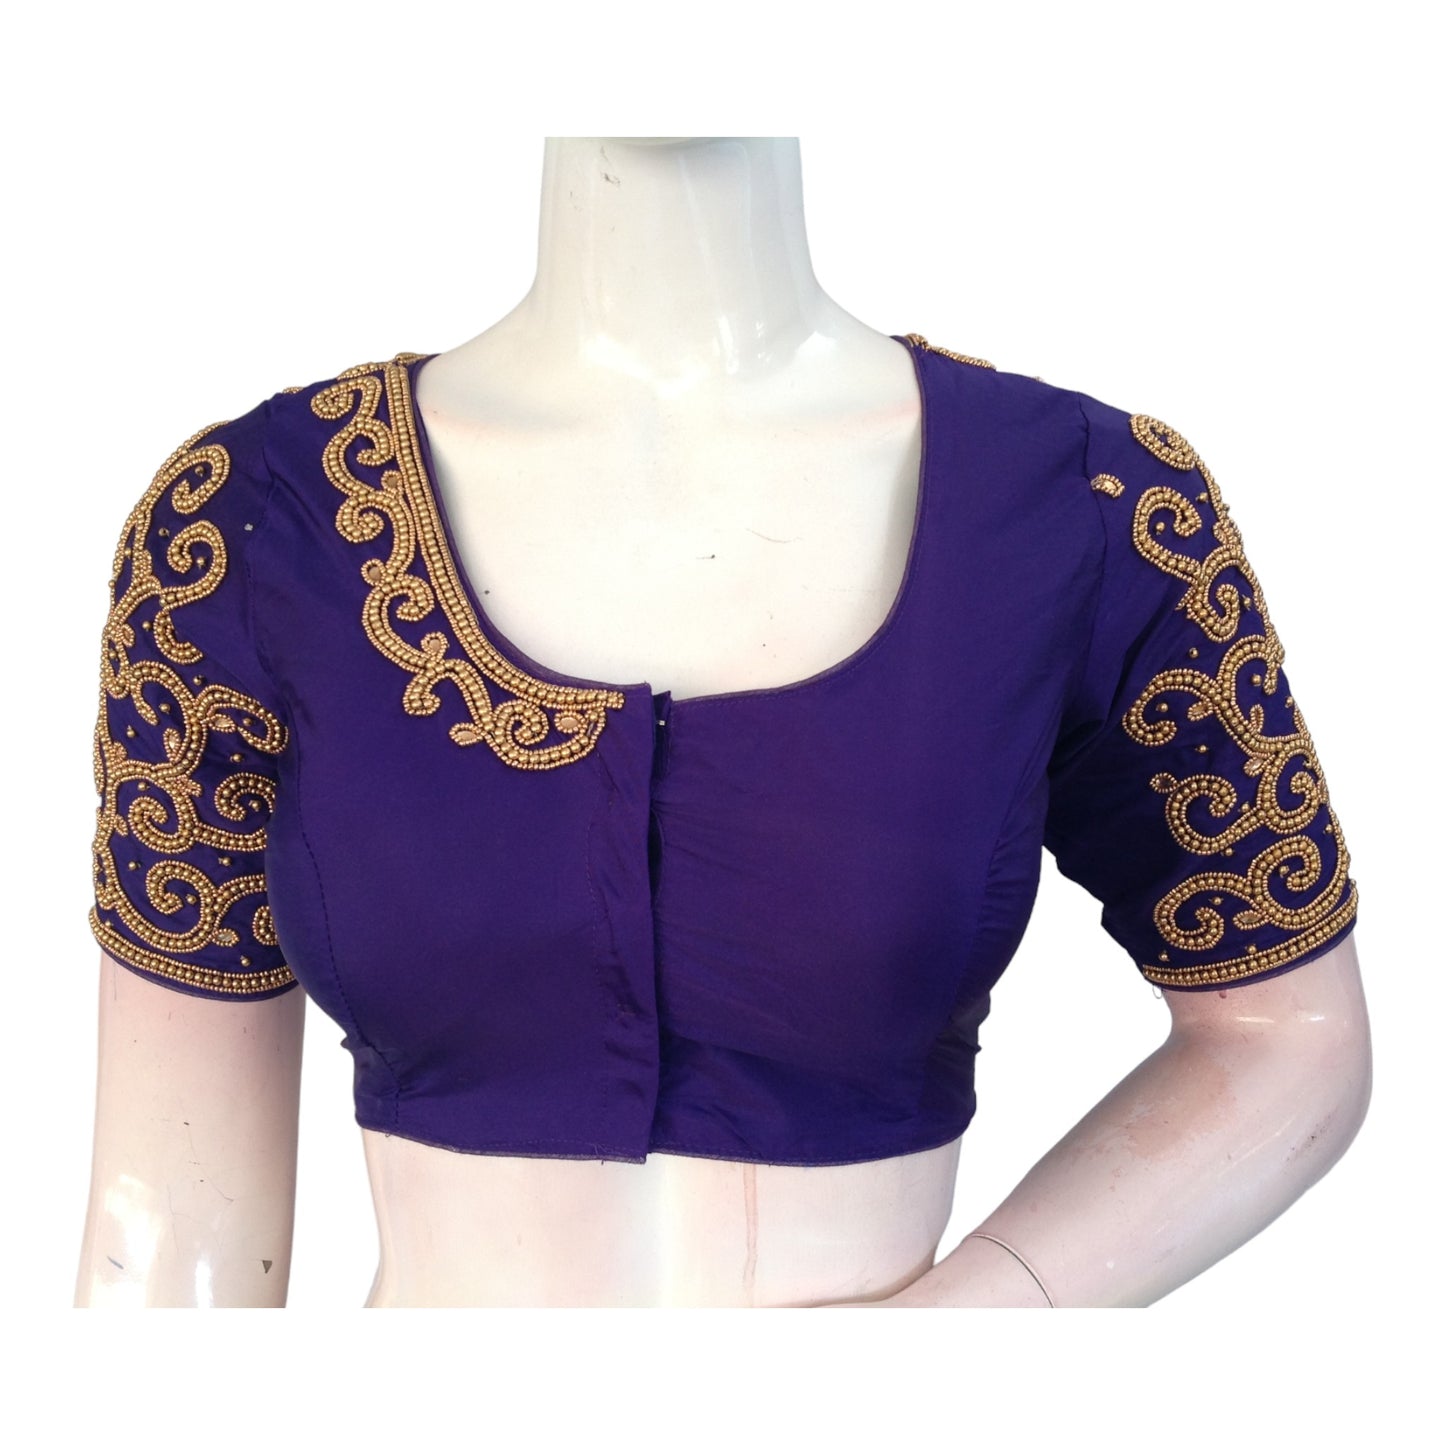 Exquisite Dark Purple Aari Hand Work Saree Blouses| Party Wear | Made in India